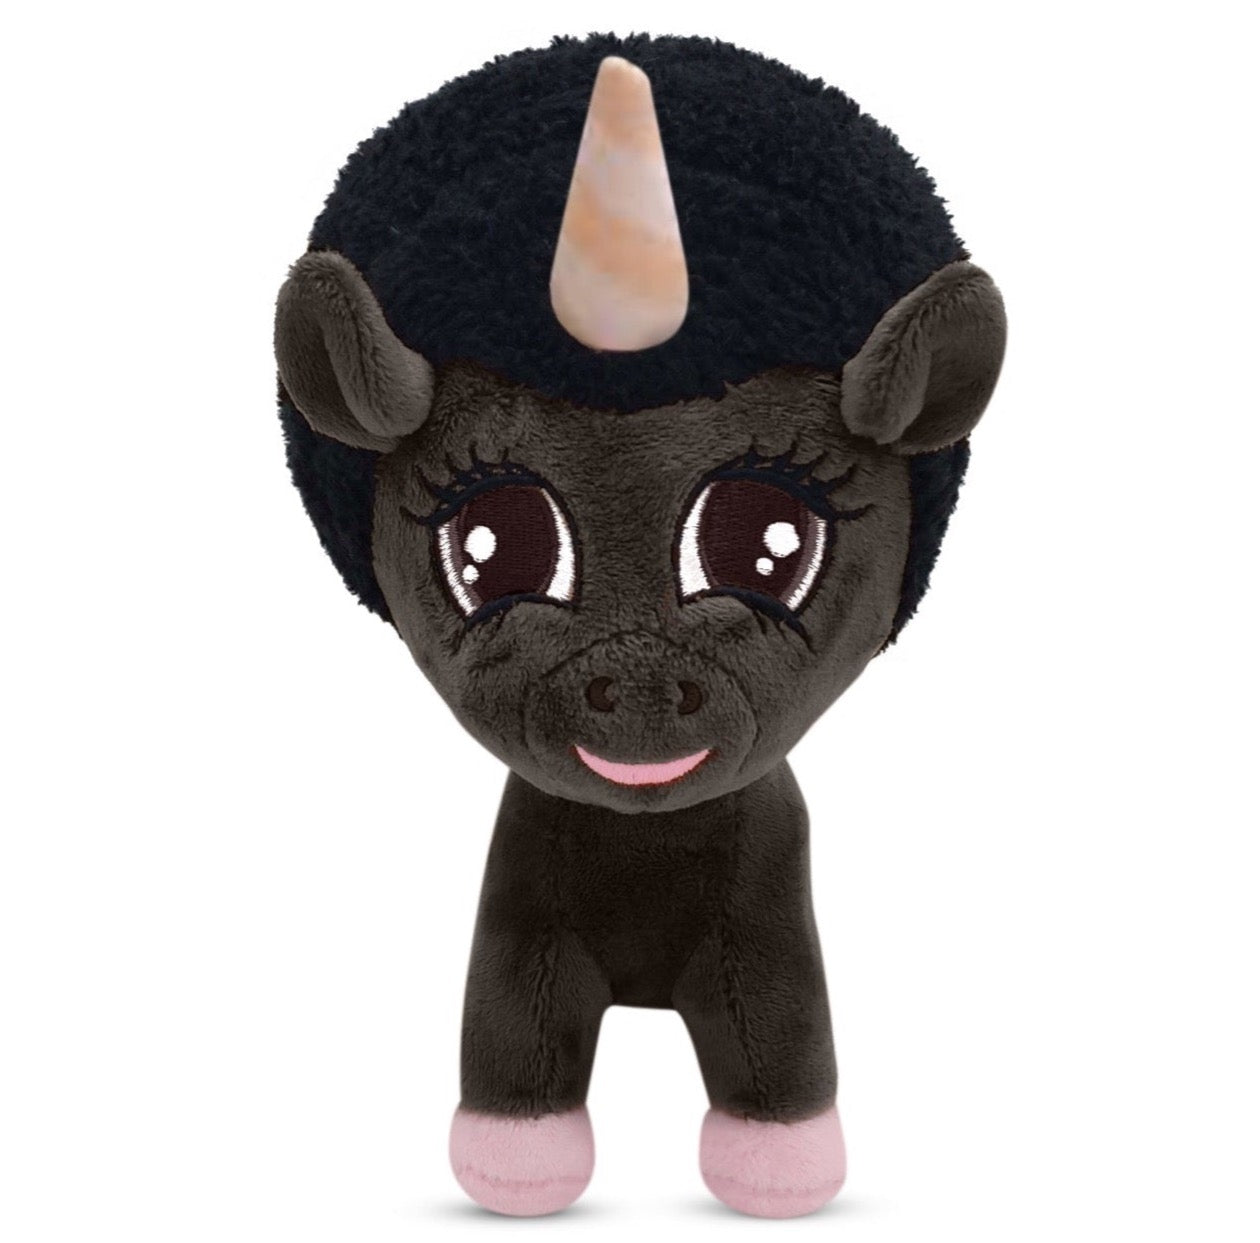 Baby Zara, Unicorn Plush Toy with Afro - Standing 8 inch